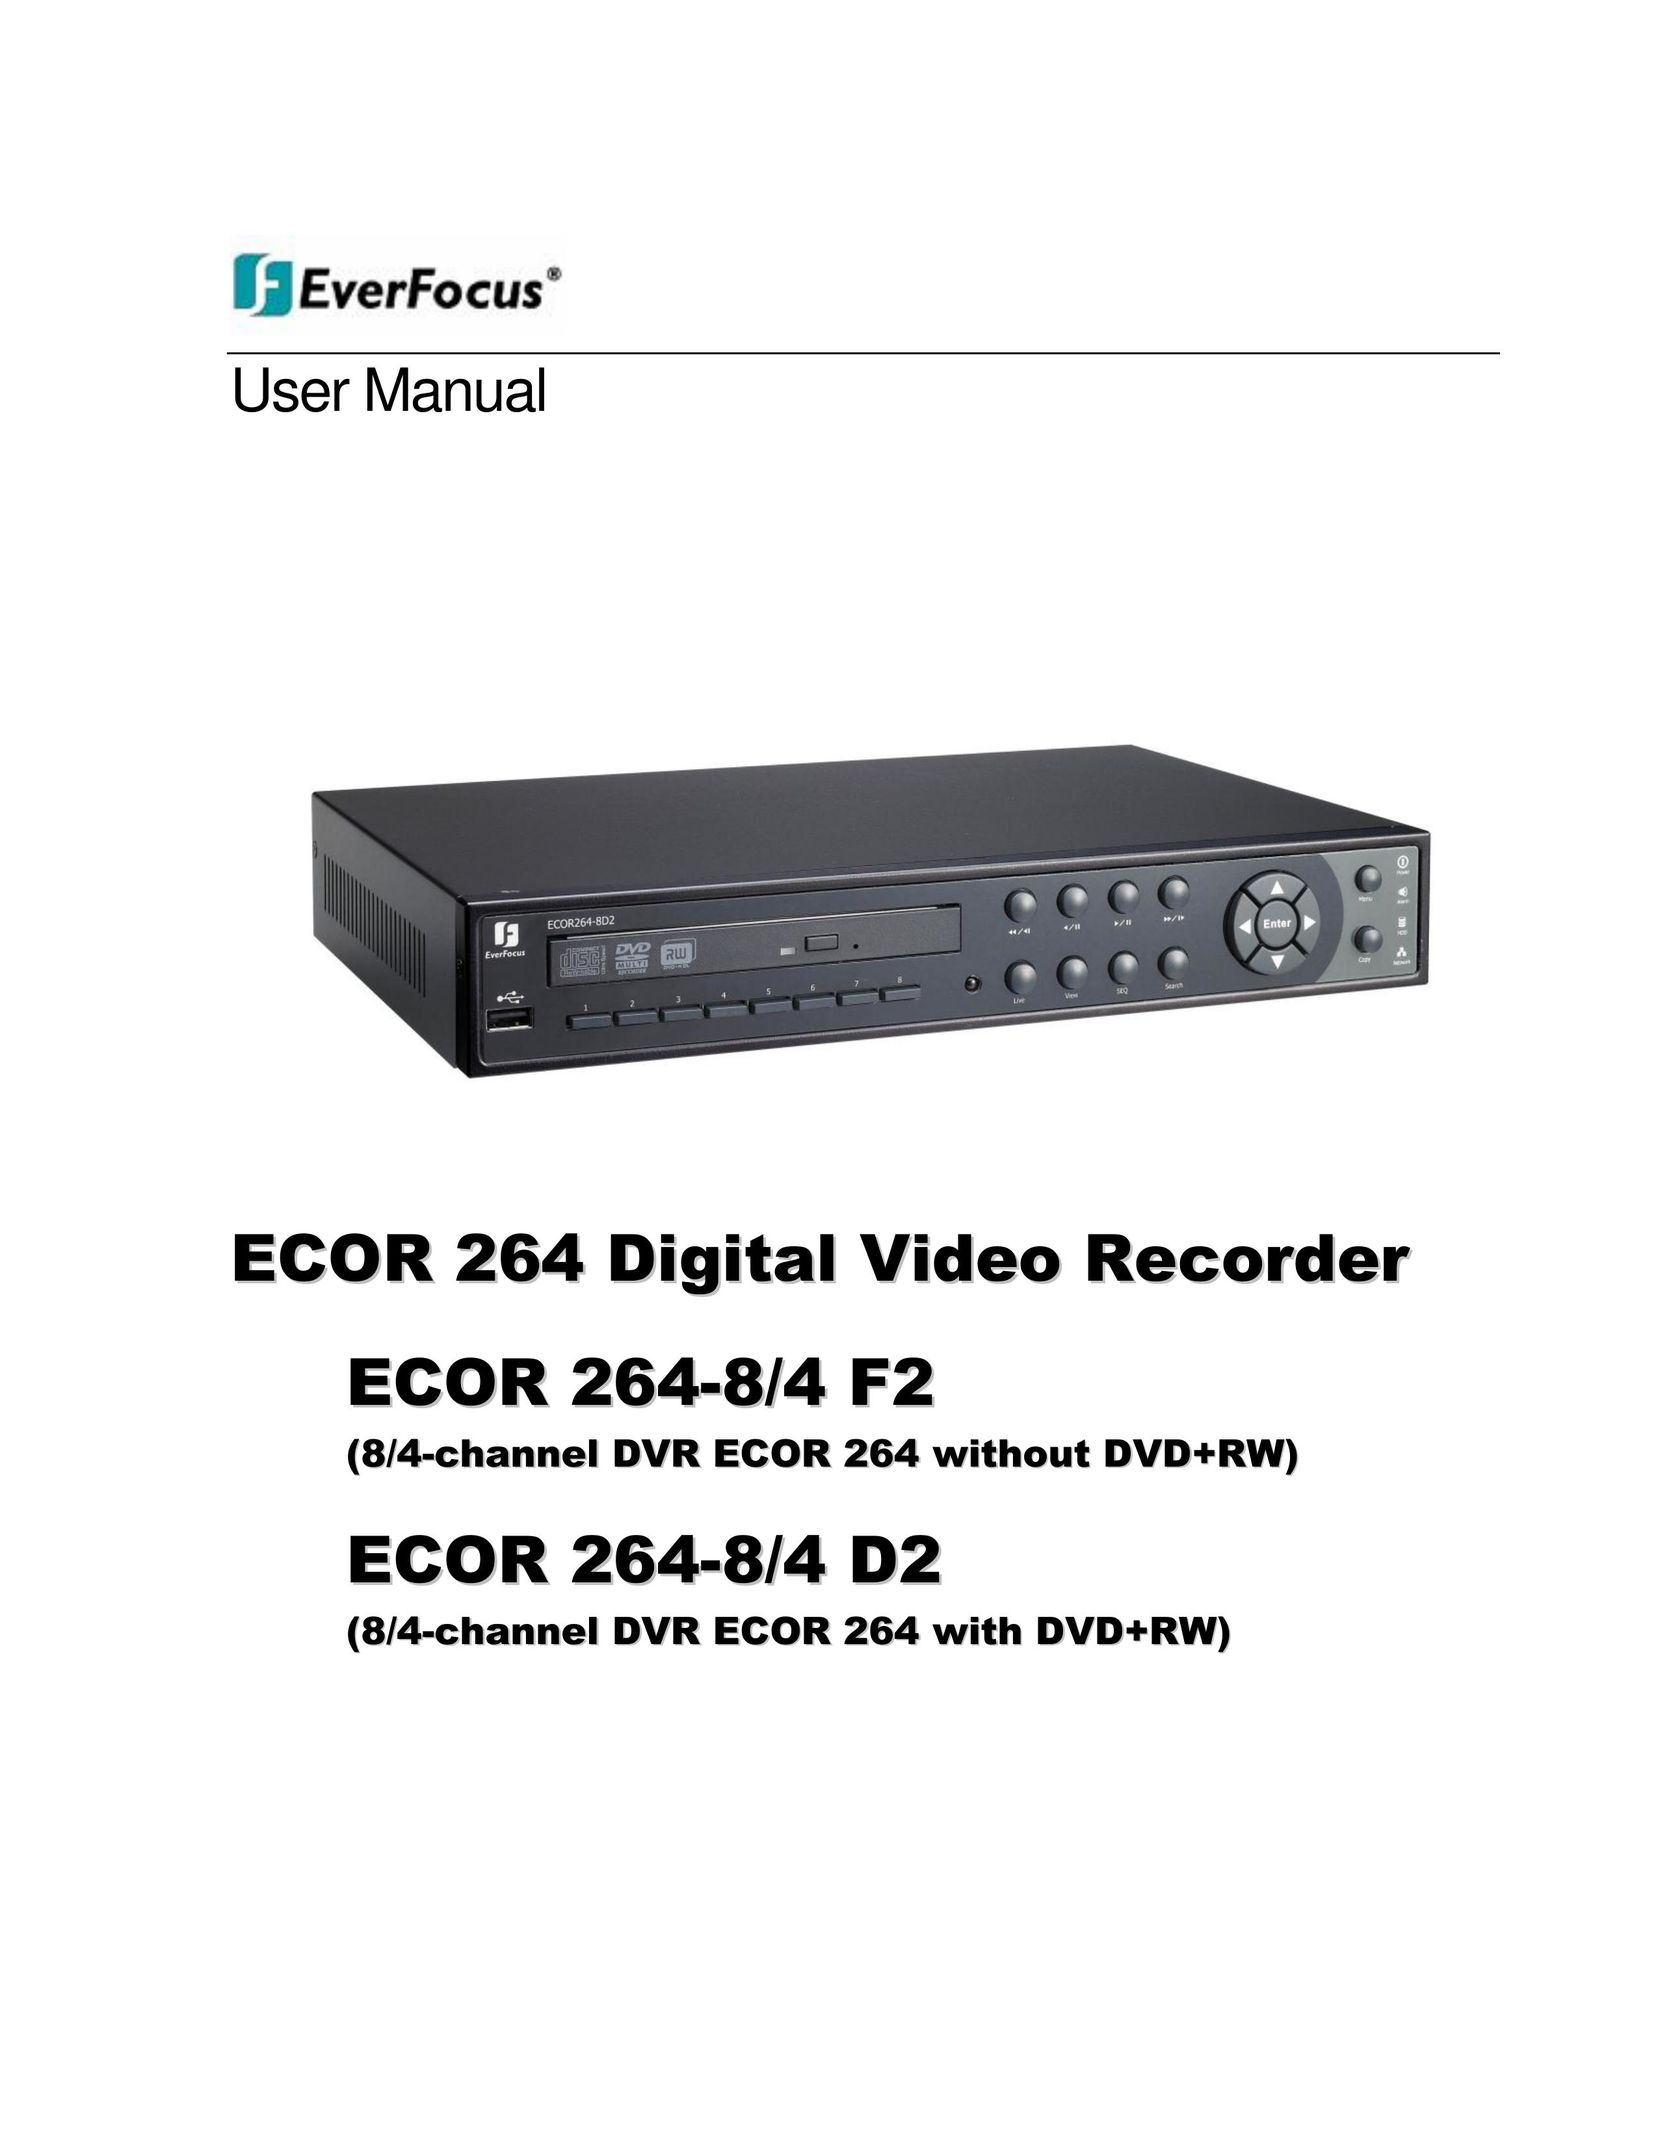 EverFocus ECOR 264-8/4 D2 DVR User Manual